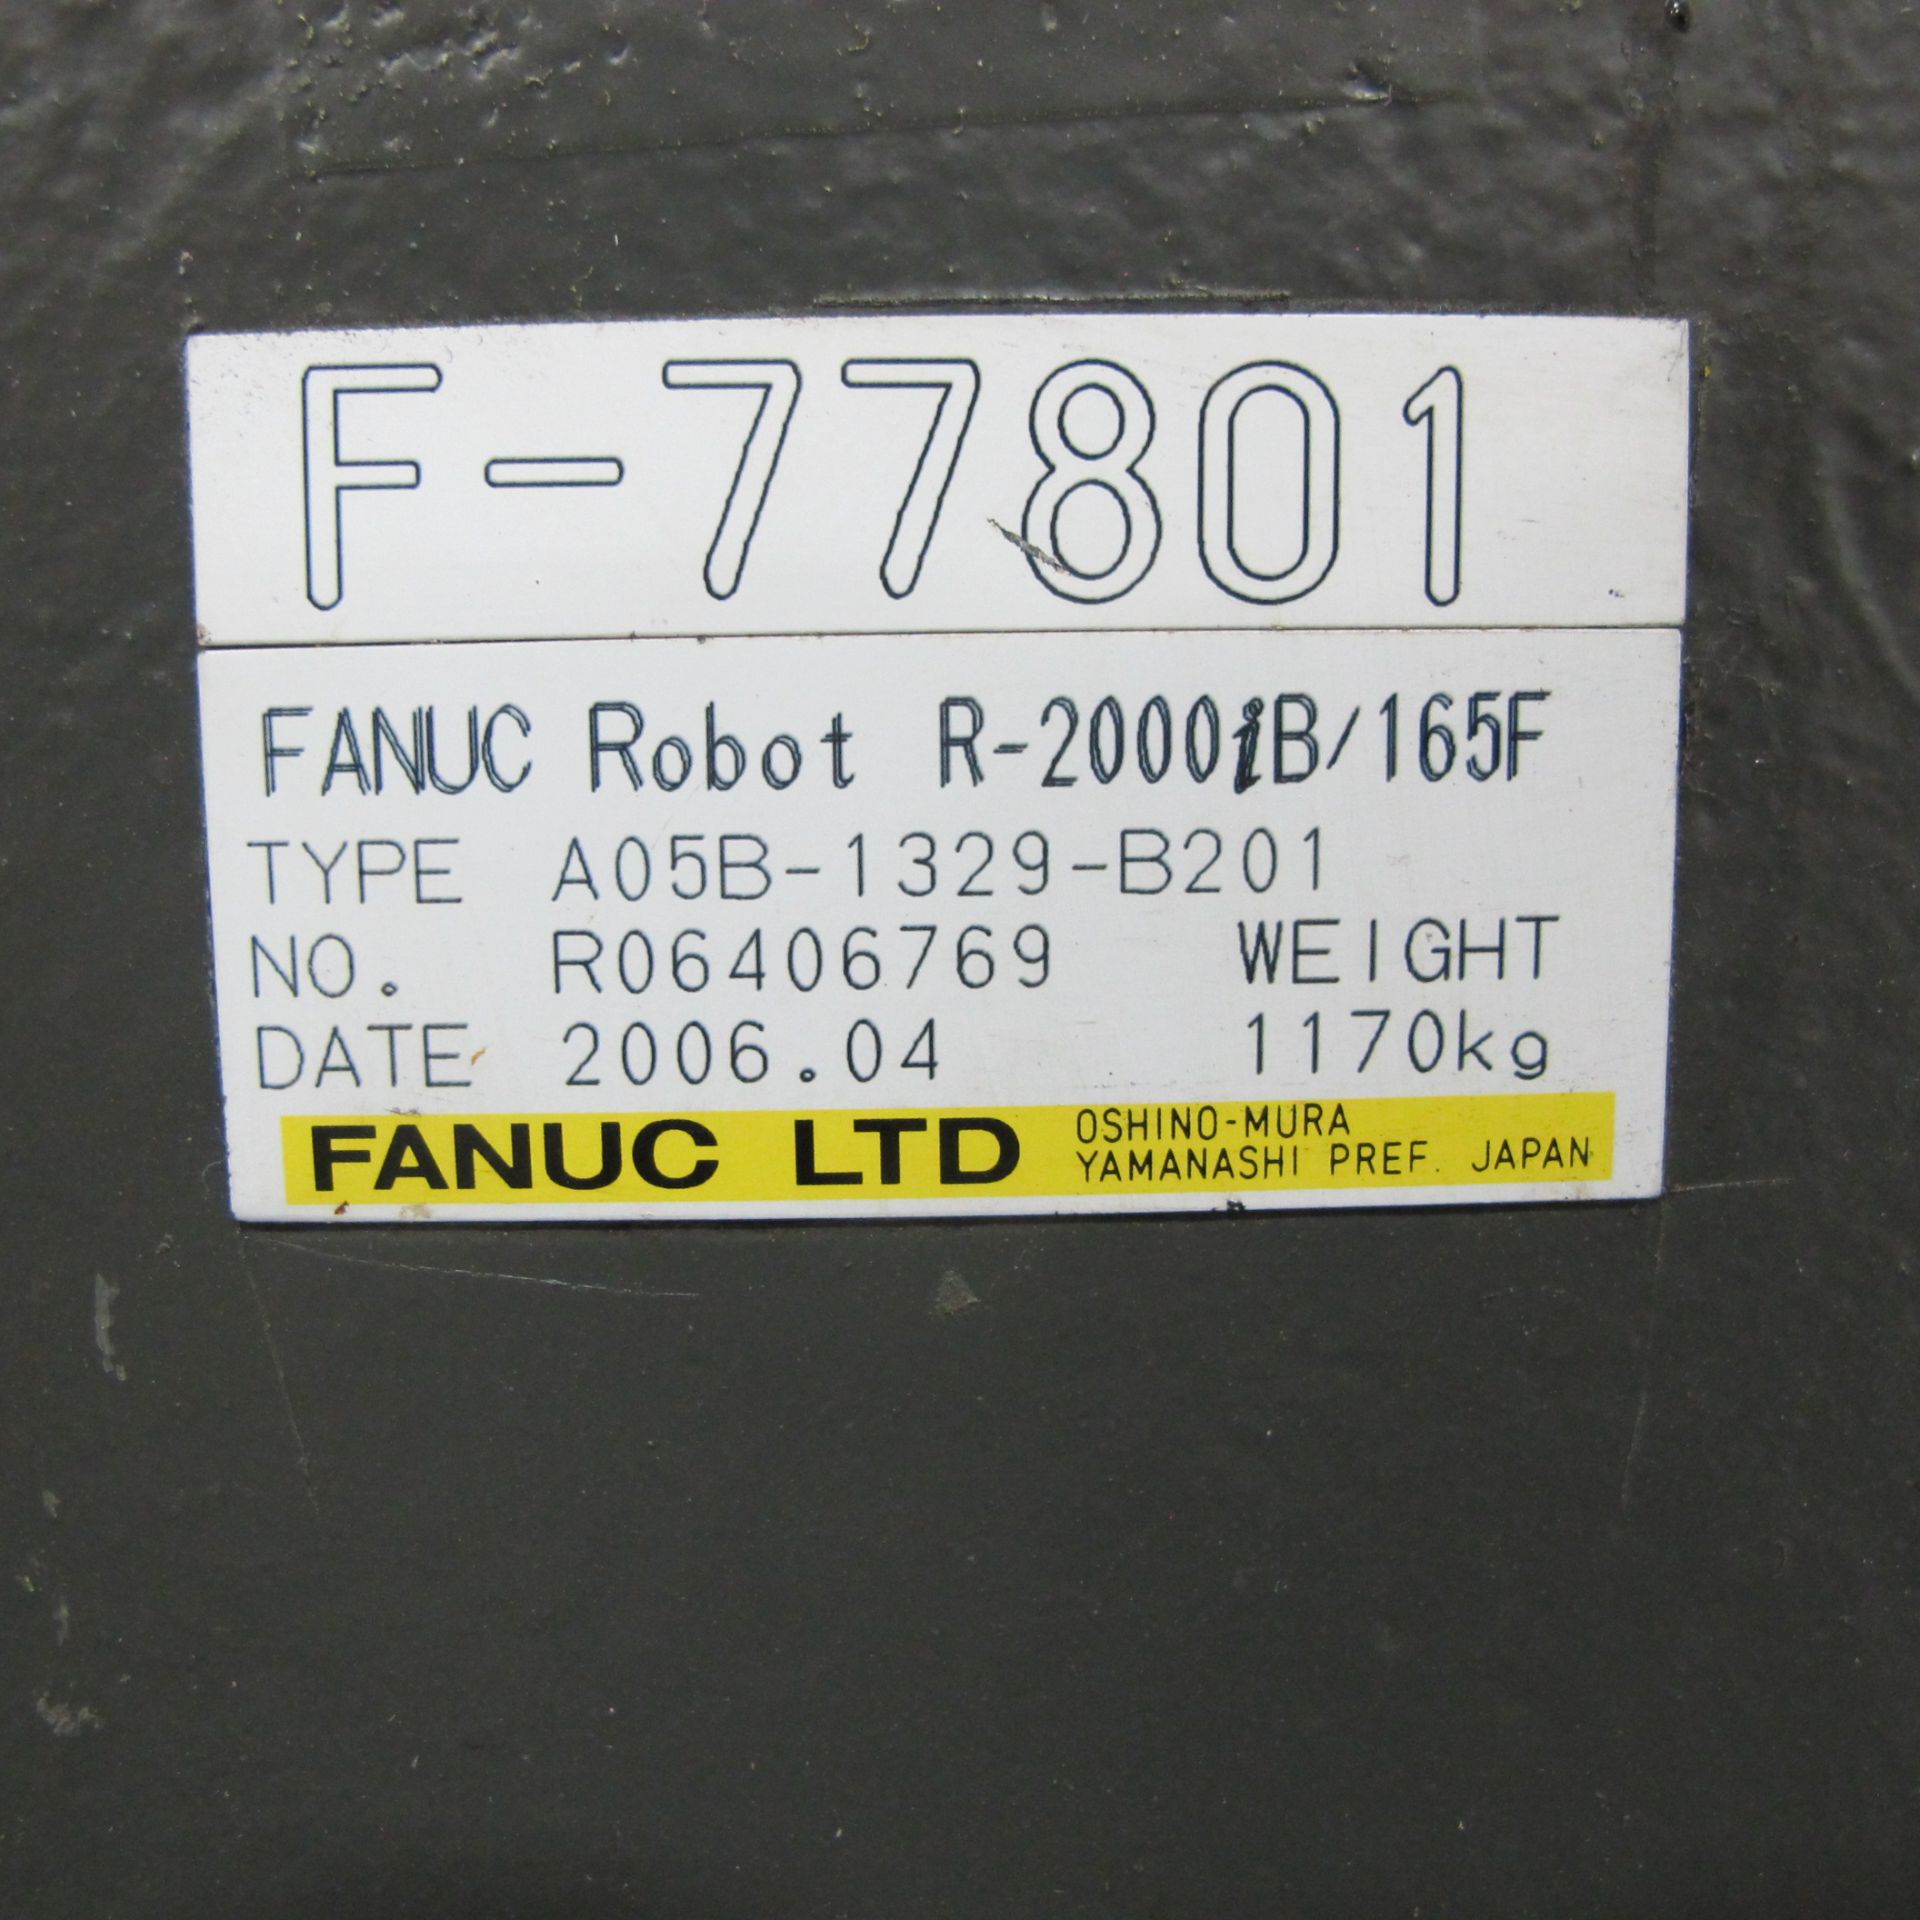 FANUC F-77801, 6 AXIS ROBOT R-2000i B/165F, S/N R06406769, W/FANUC SYSTEM R-J3iC CONTROL PANEL W/ - Image 3 of 6